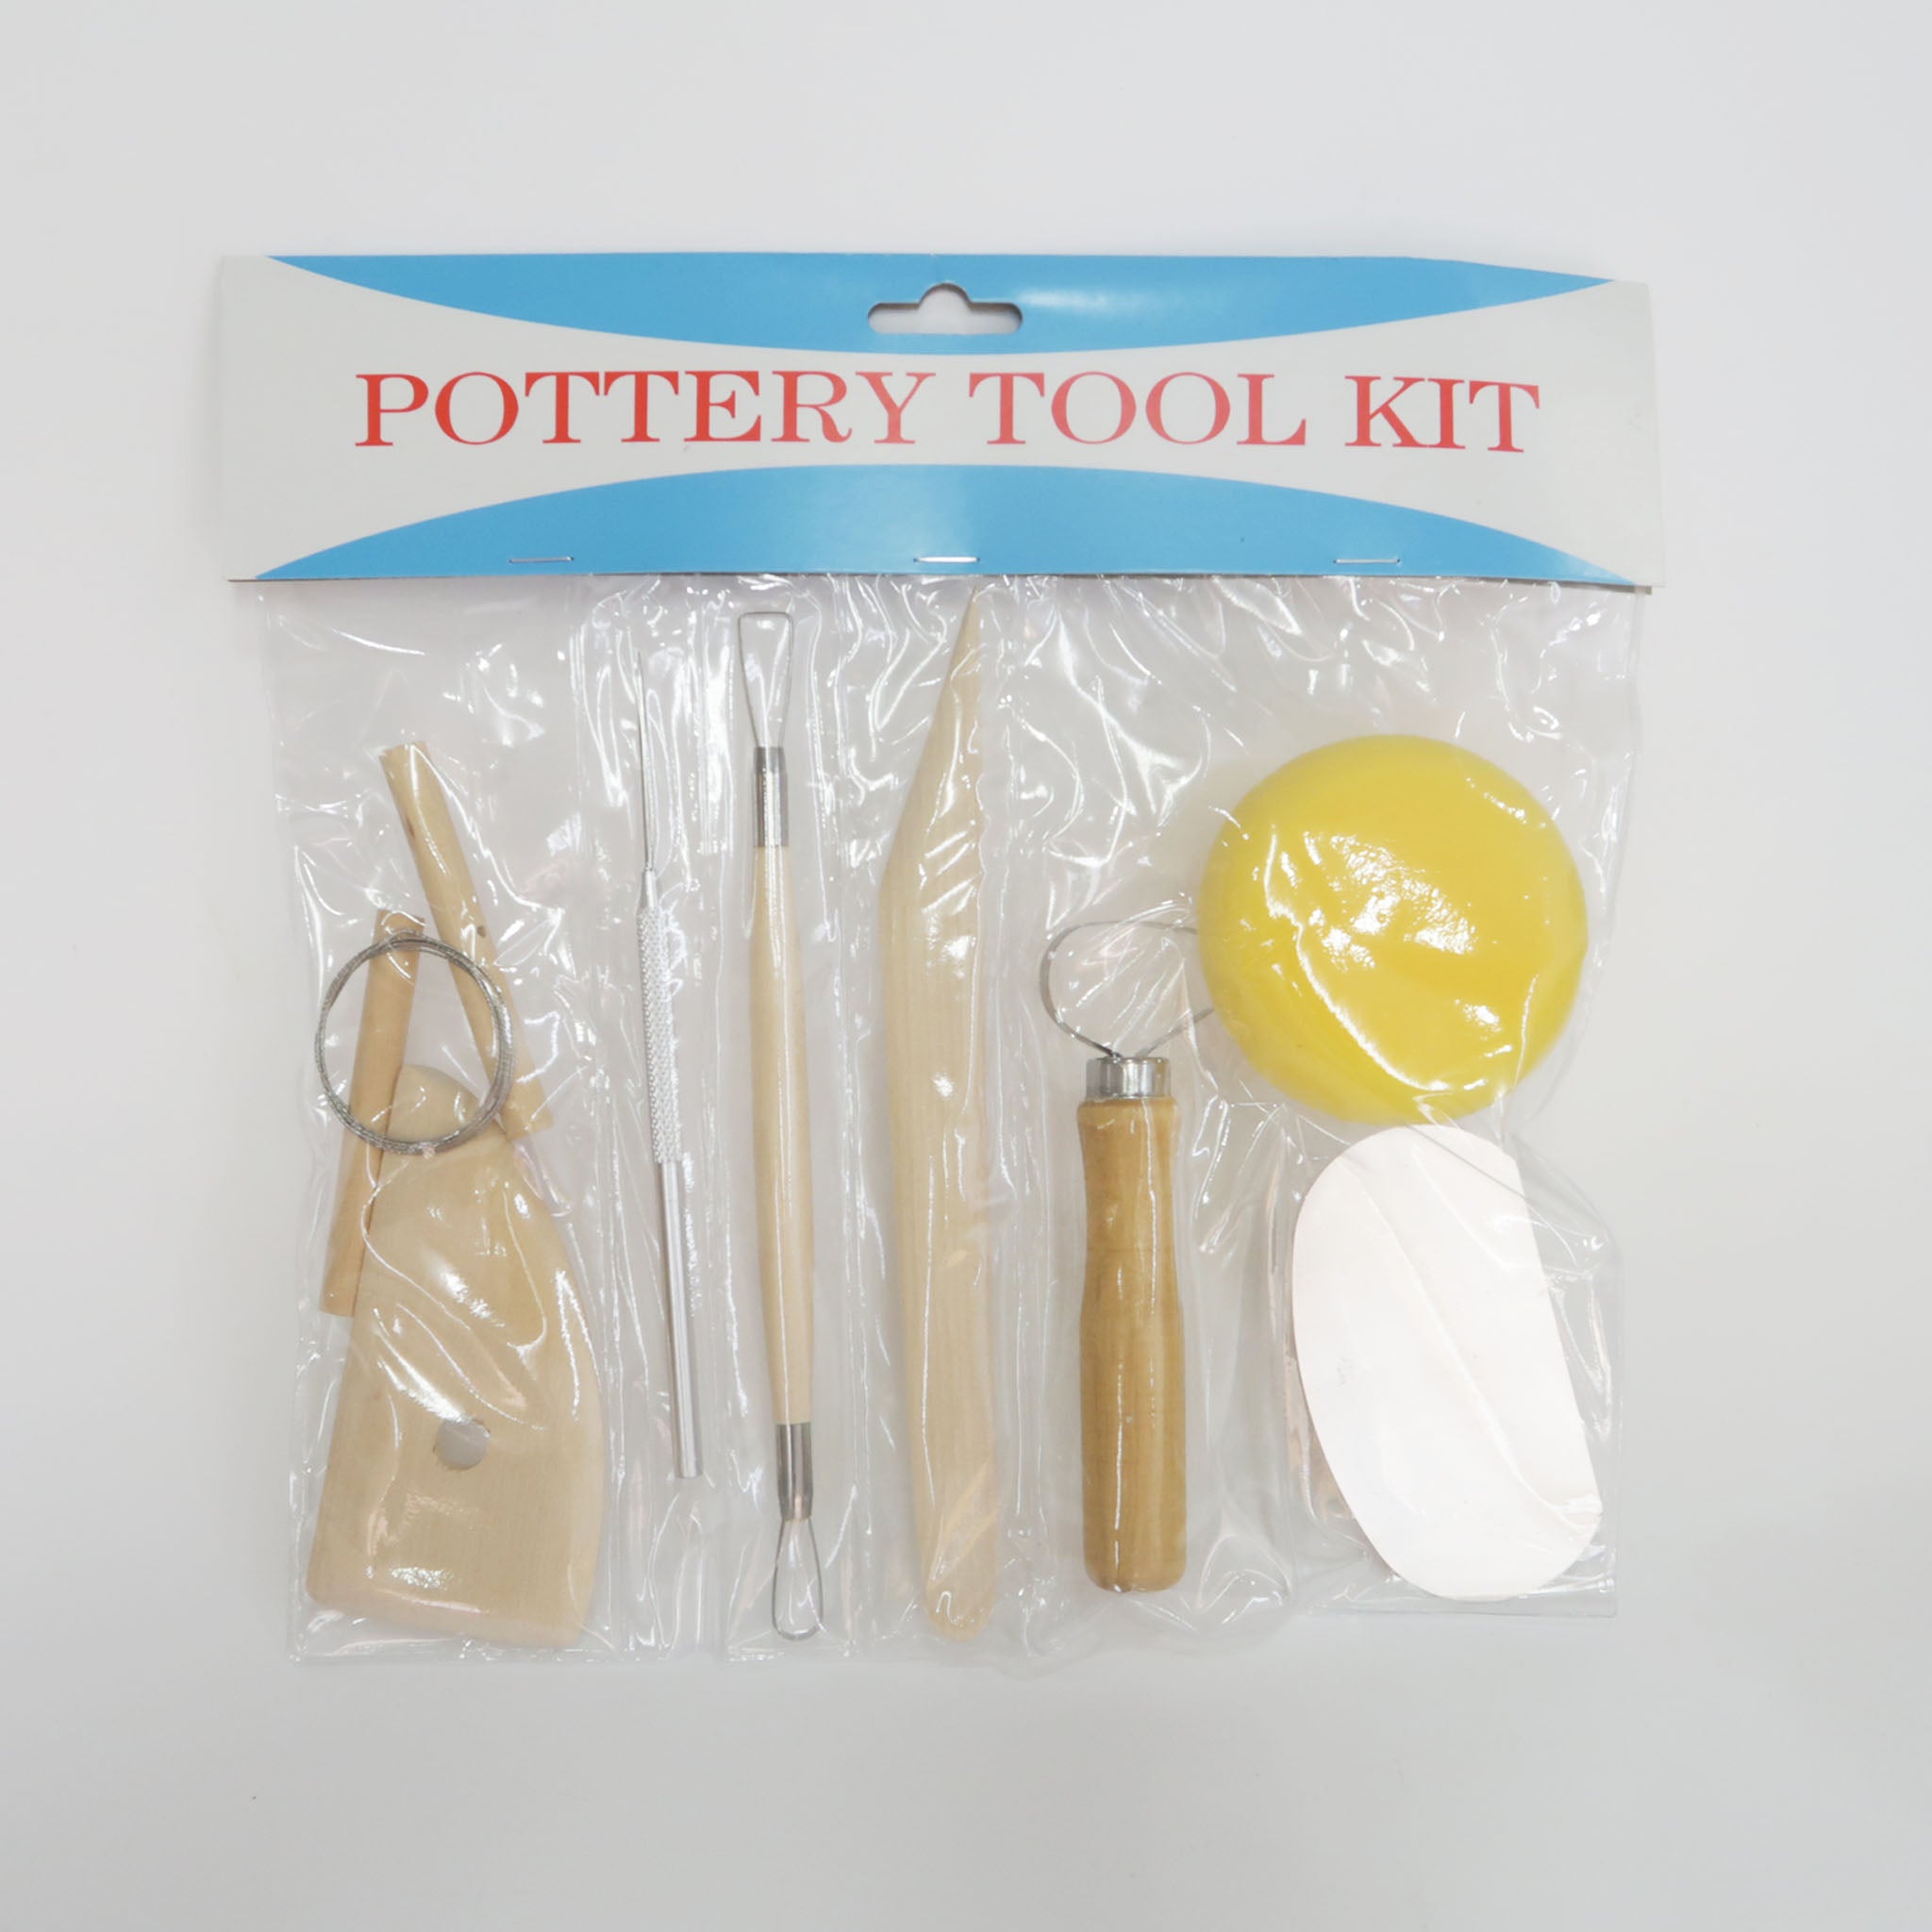 Pottery Tool Kit - 8 Piece